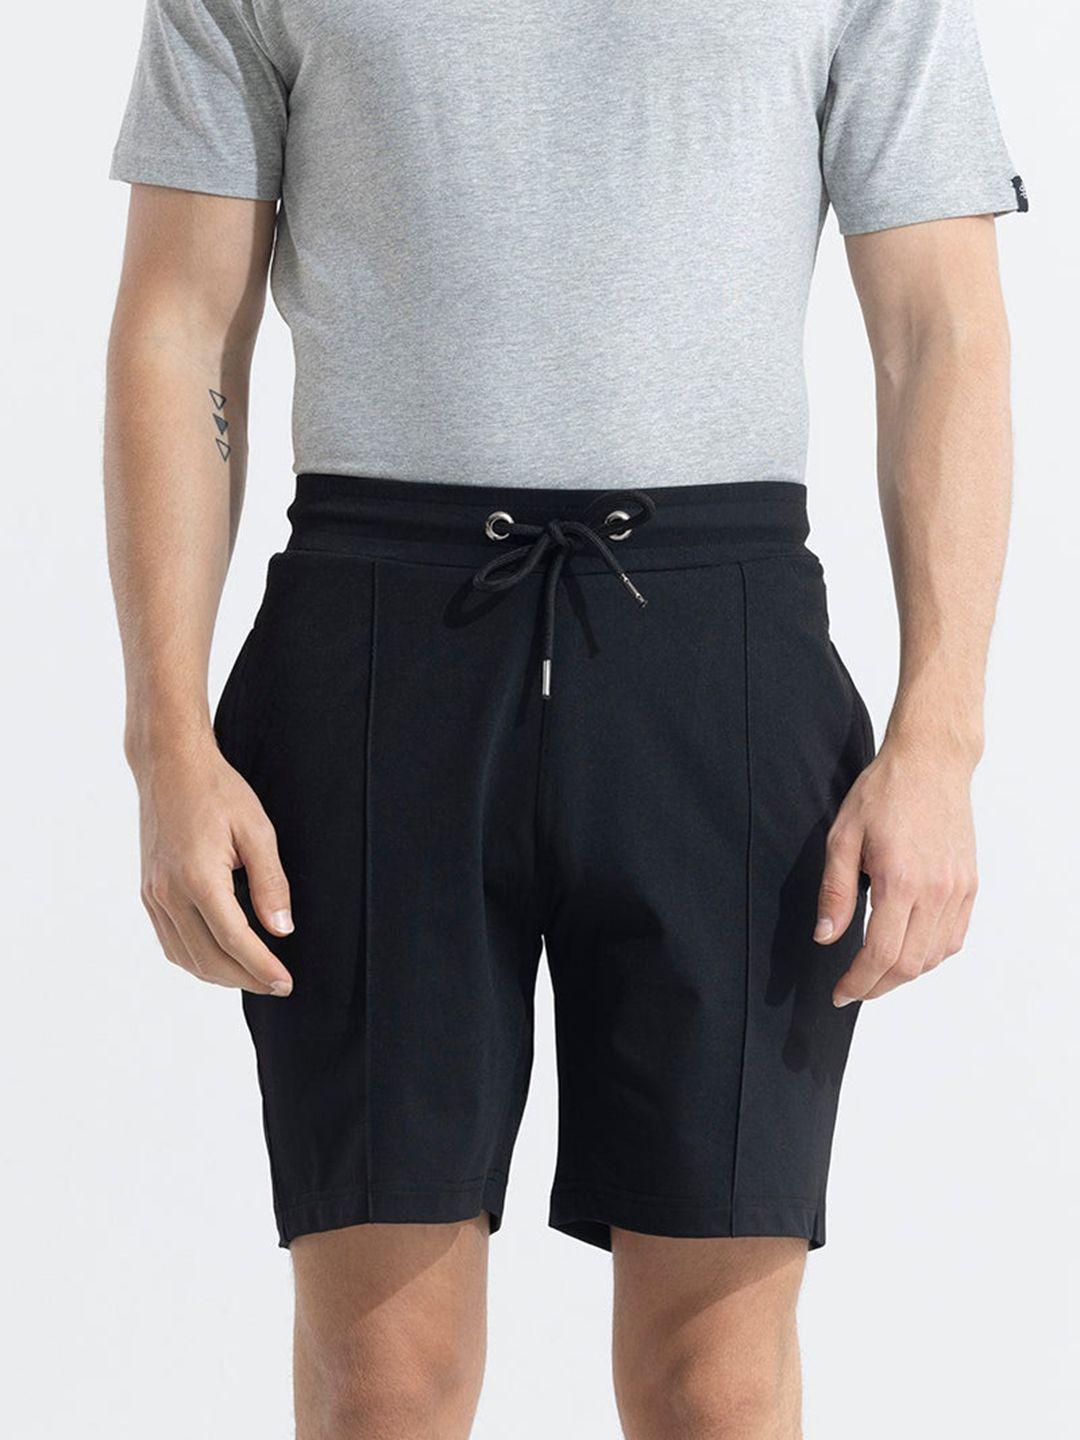 snitch men shorts